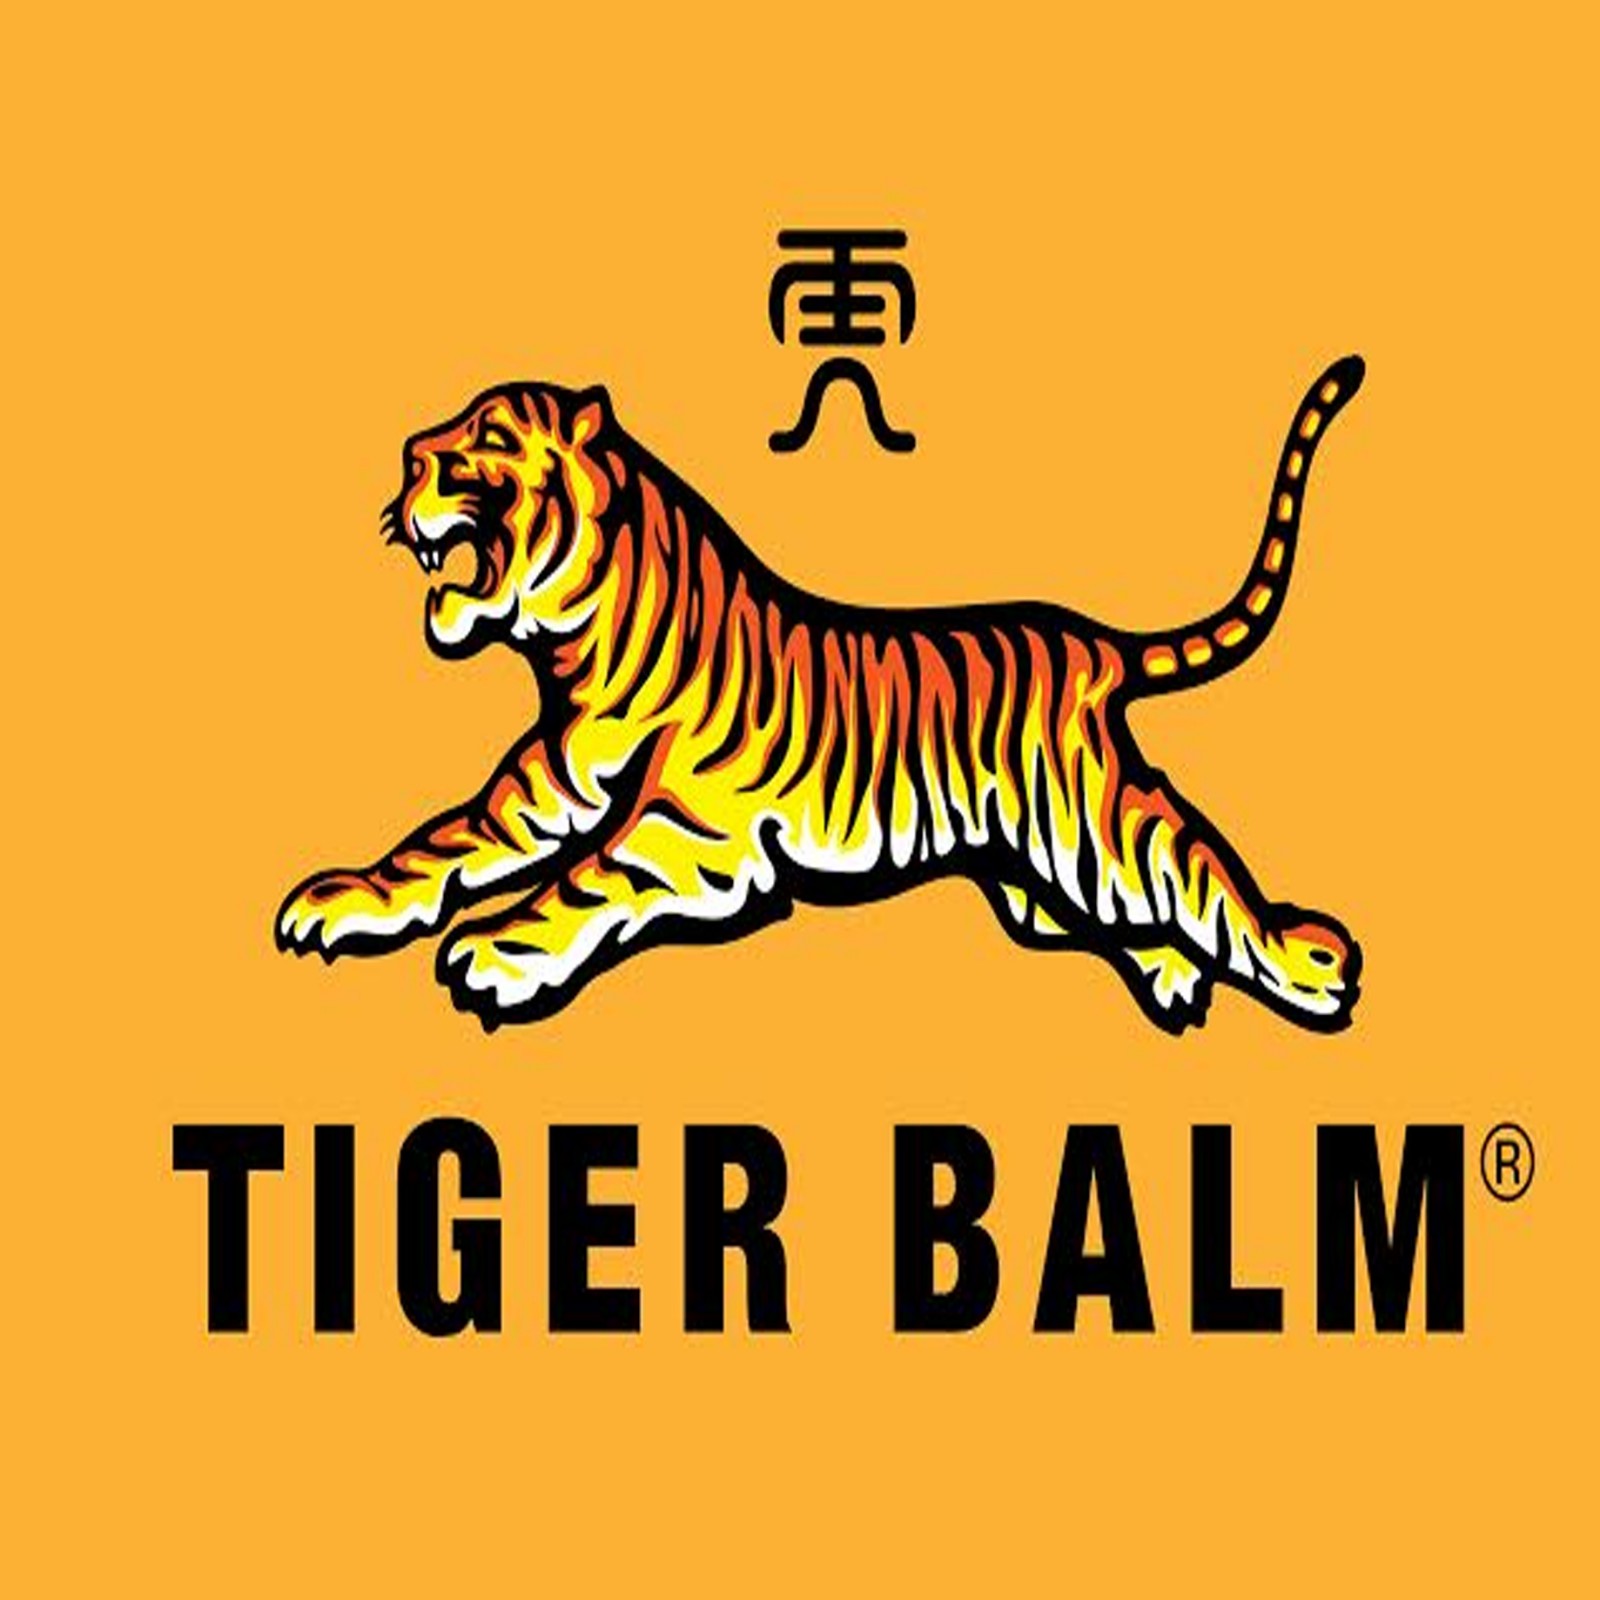 Product Brand: Tiger Balm